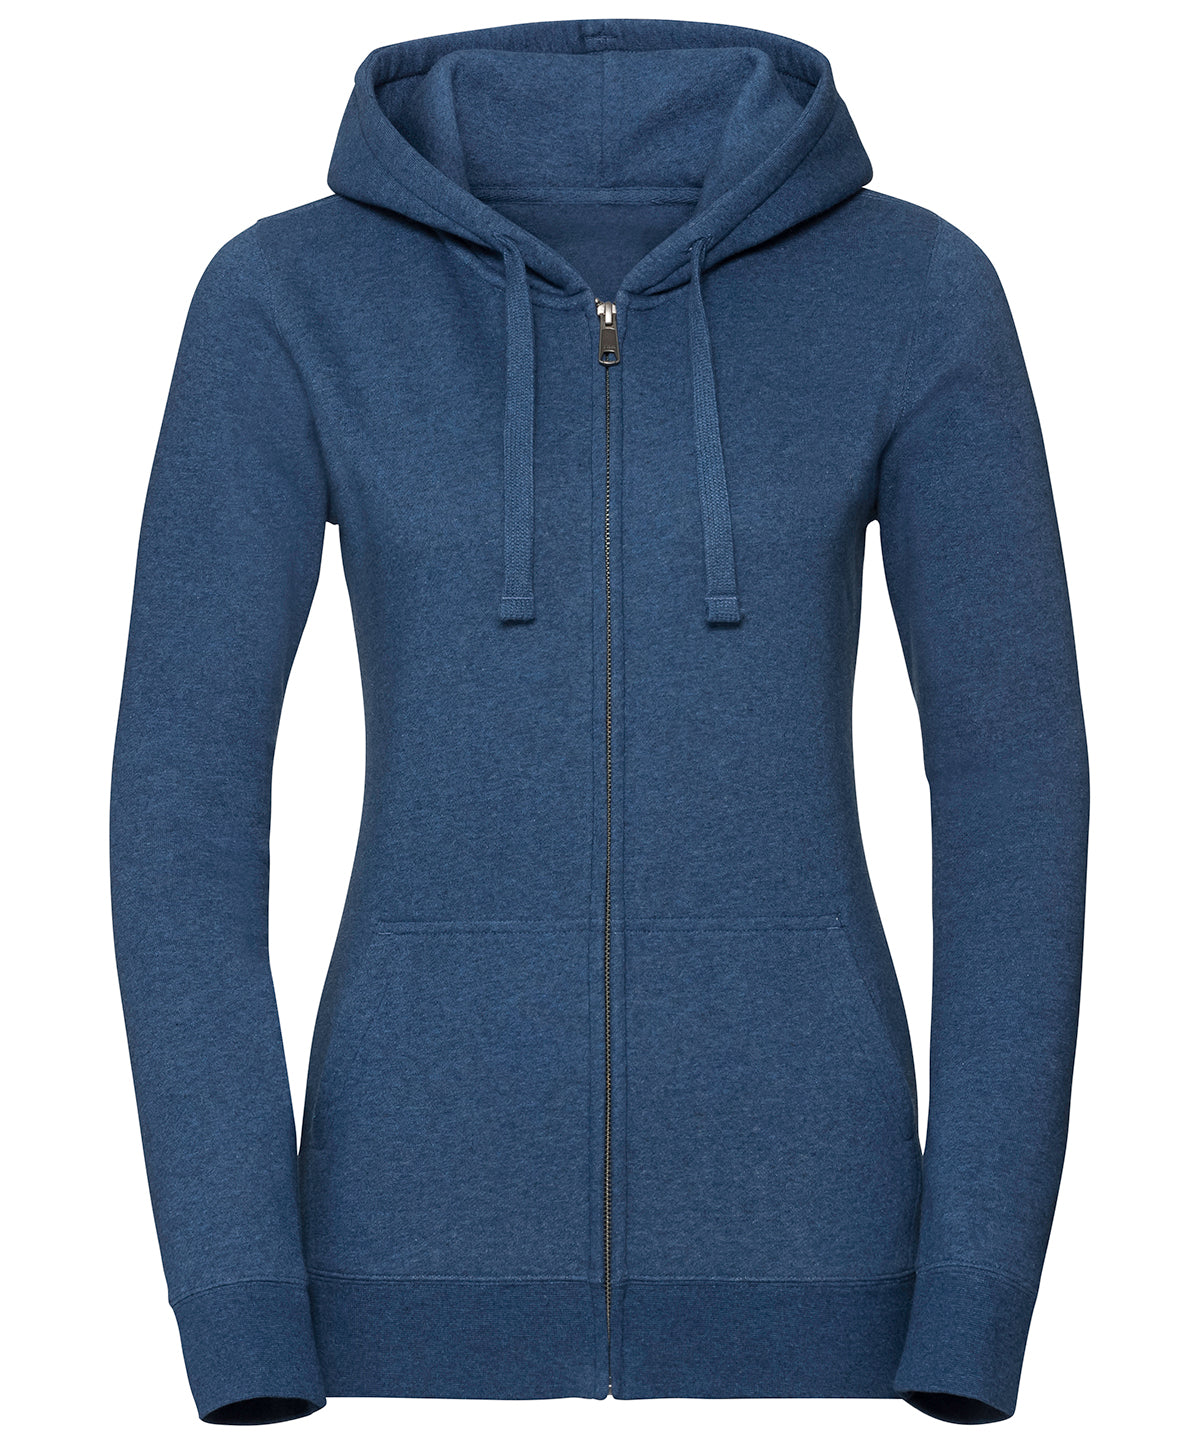 Hettupeysur - Women's Authentic Melange Zipped Hood Sweatshirt